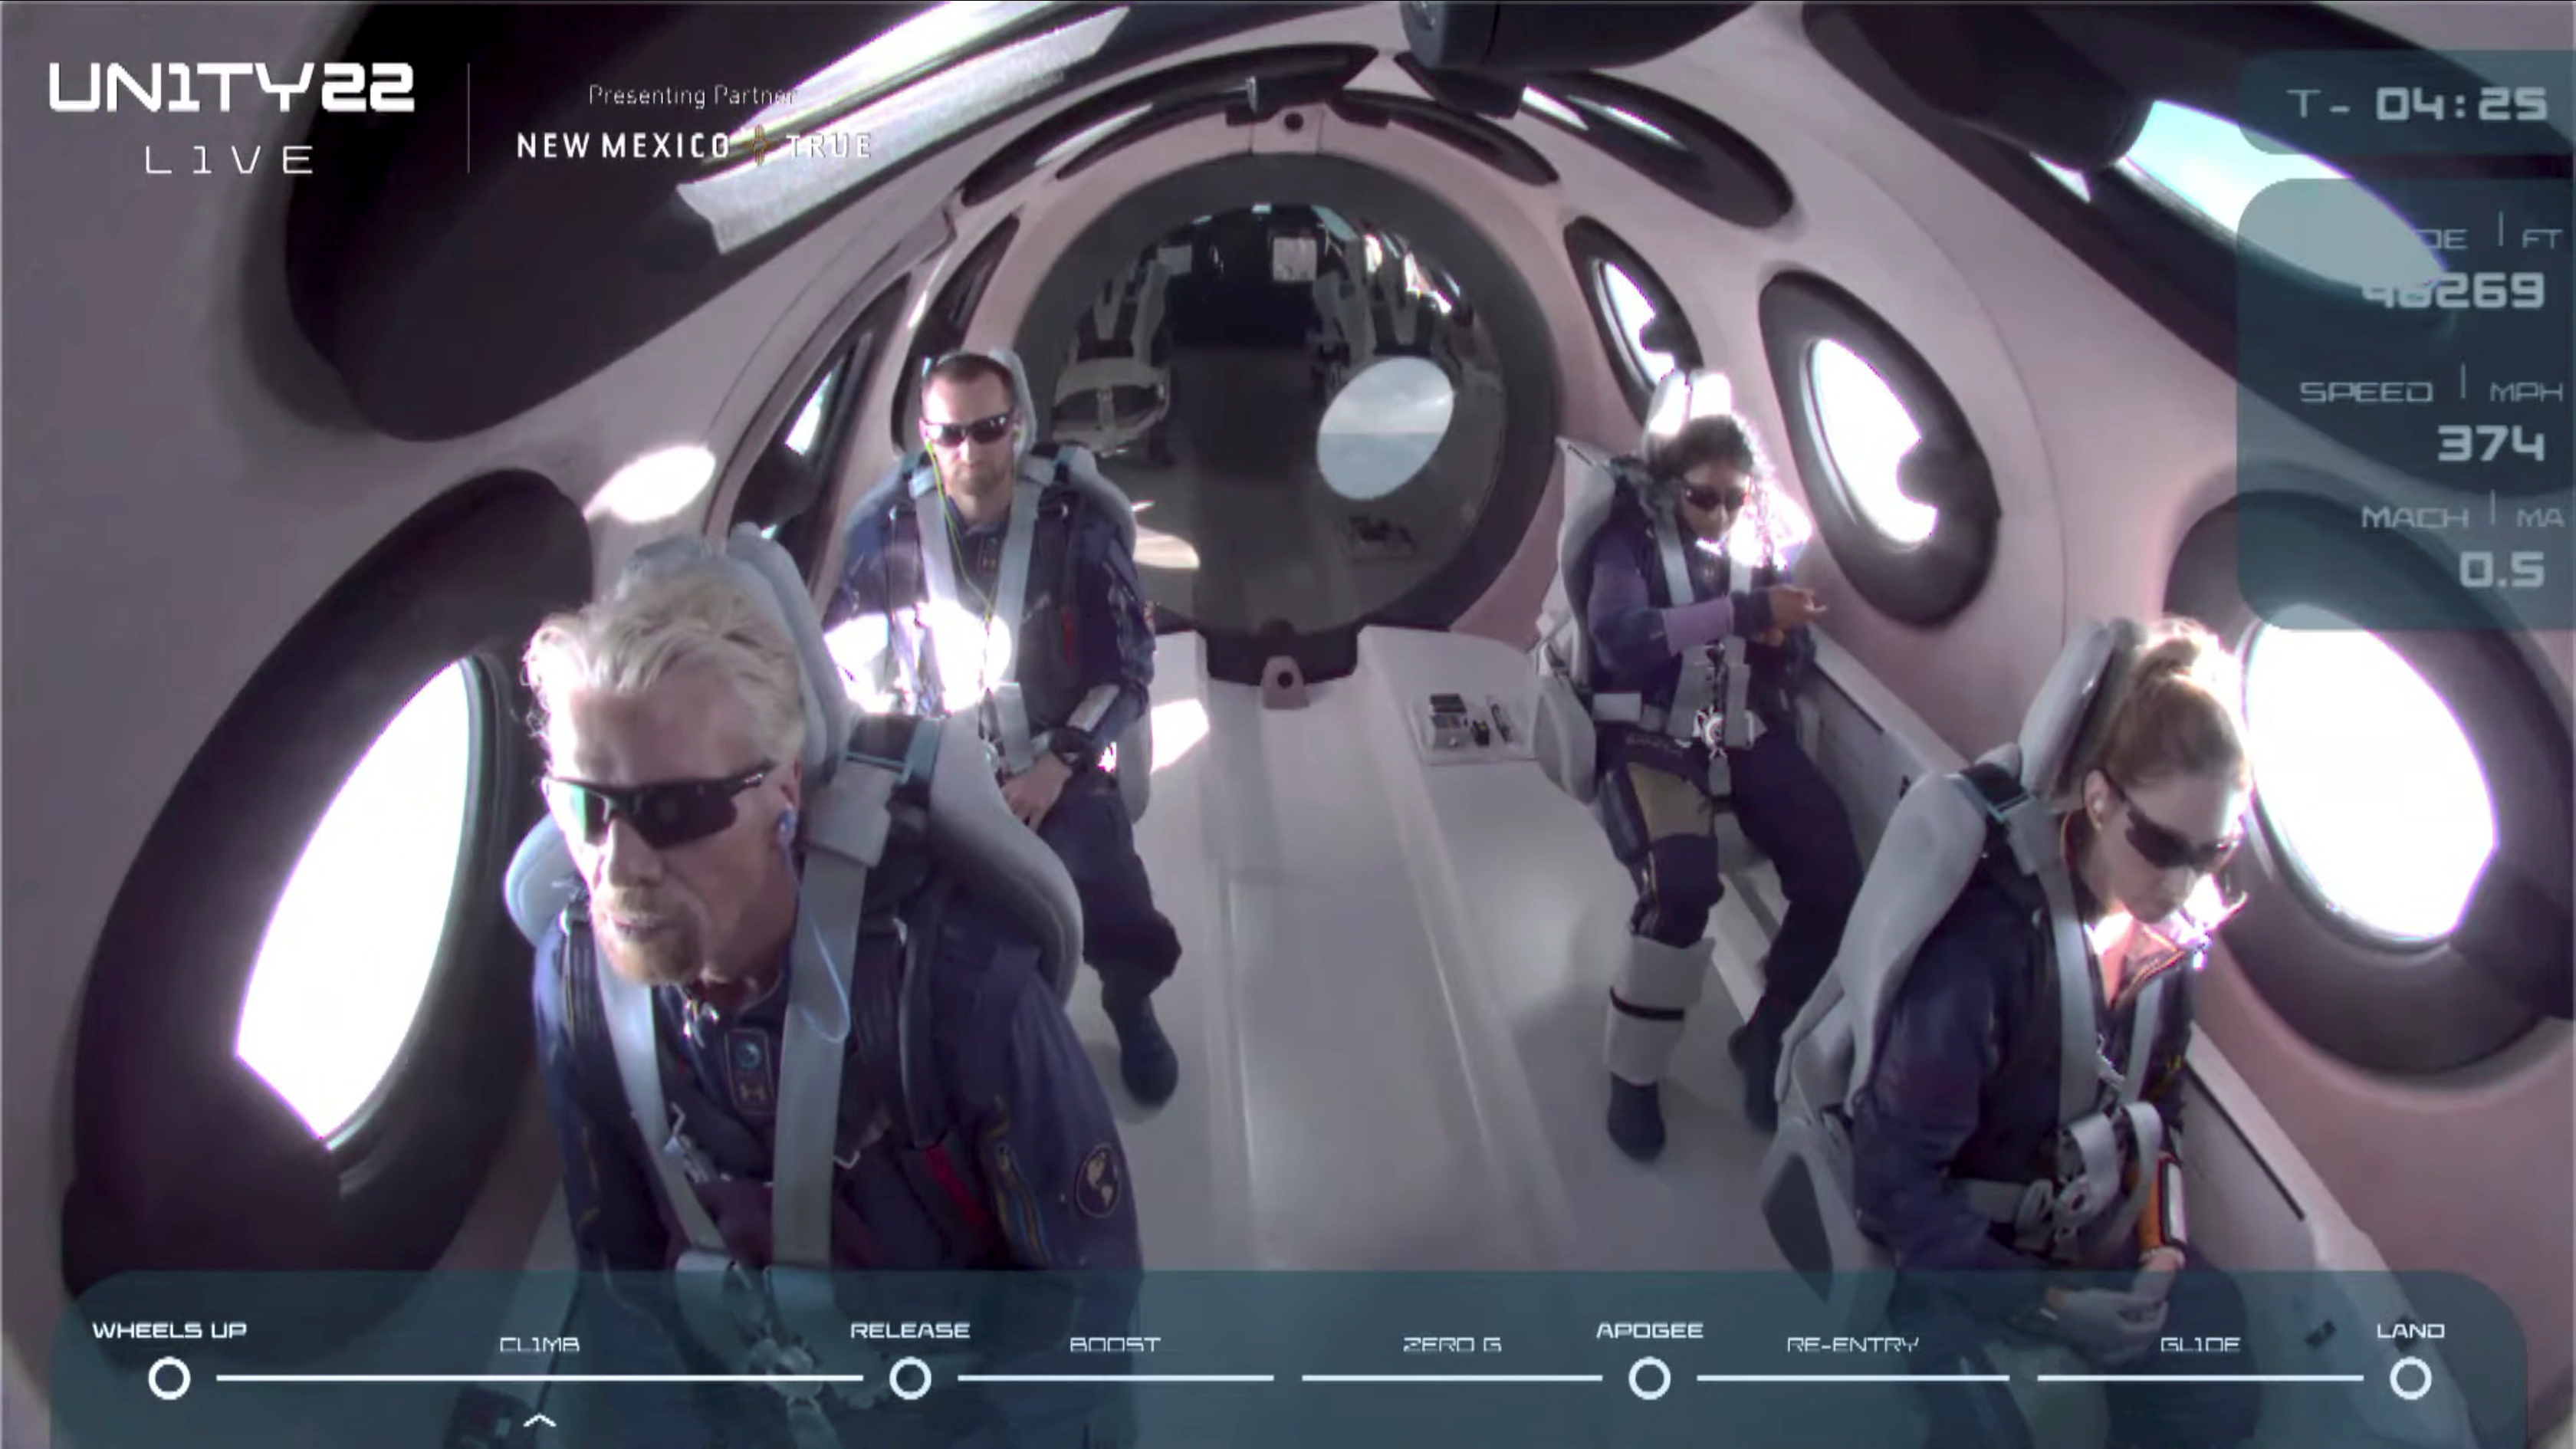 Billionaire Richard Branson and crew are seen on board Virgin Galactic's passenger rocket plane VSS Unity